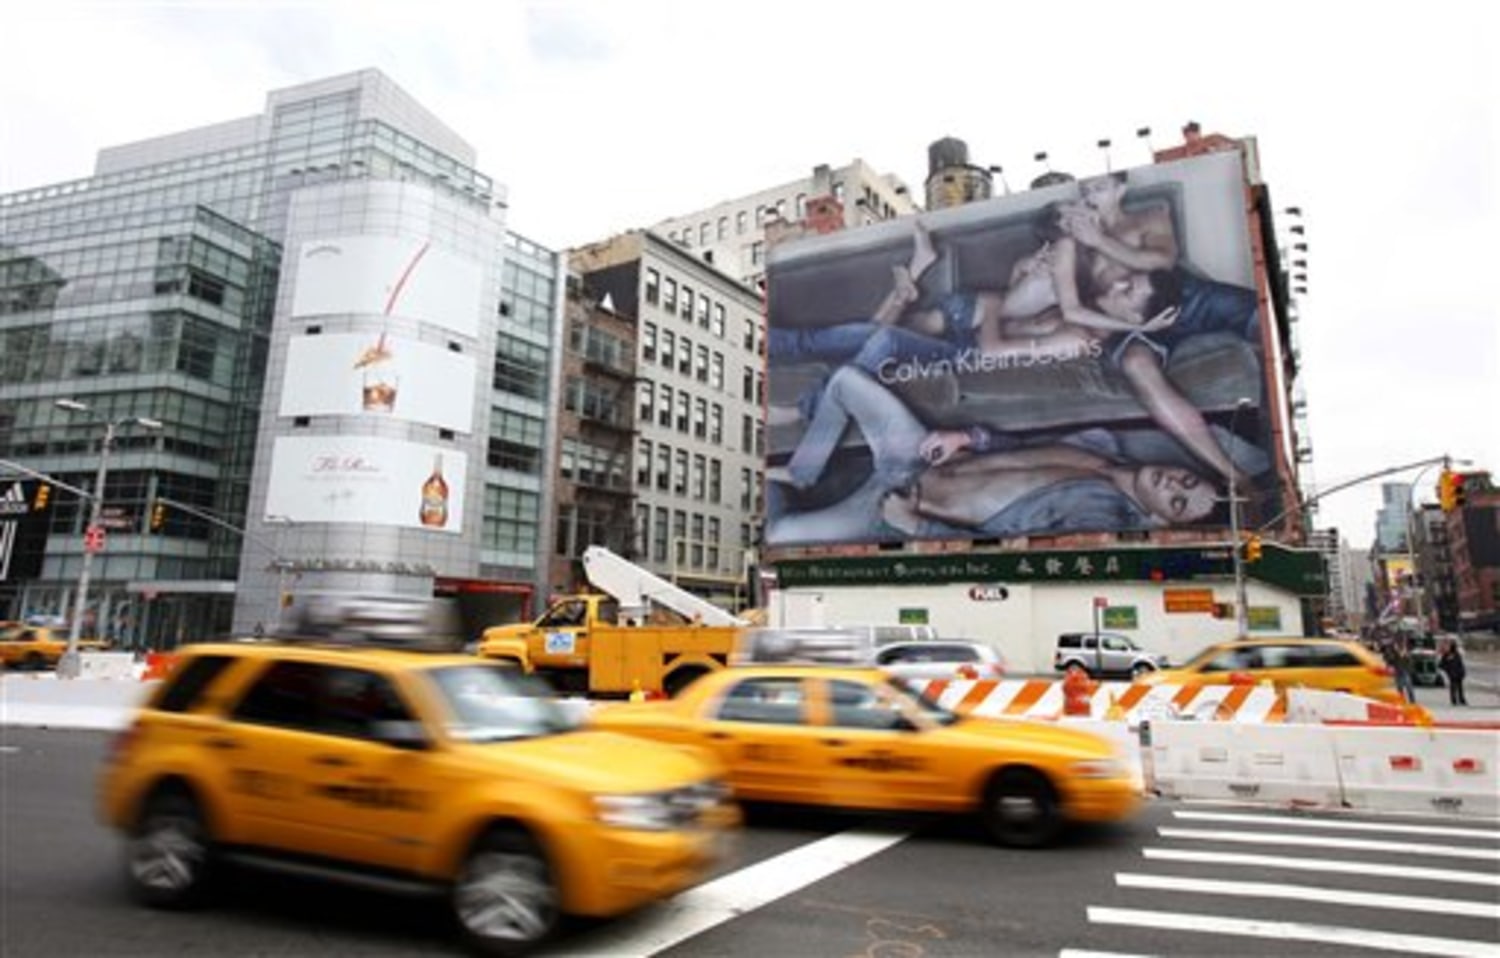 Three's company in racy Calvin Klein billboard